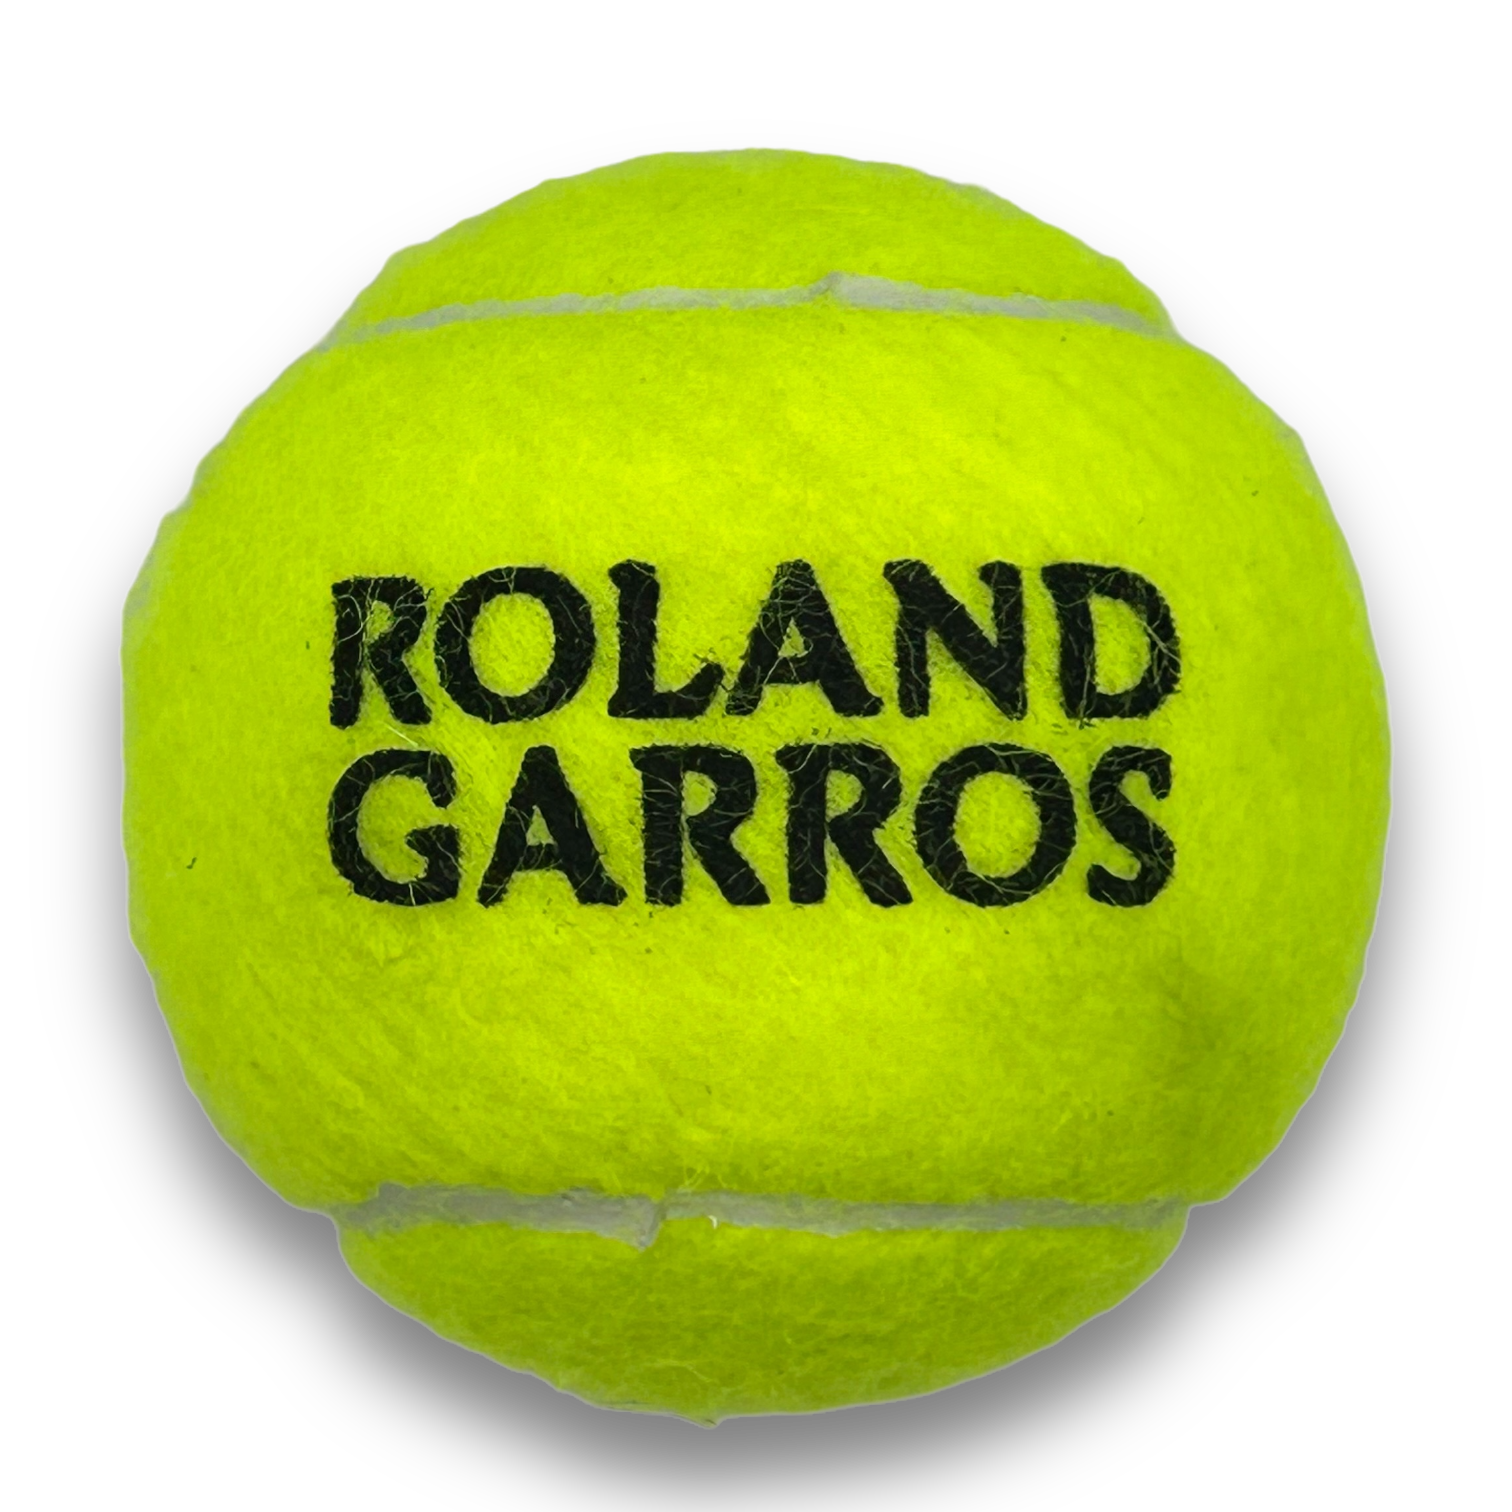 ALEX DE MINAUR SIGNED WILSON 3 ROLAND GARROS TENNIS BALL (AFTAL COA)